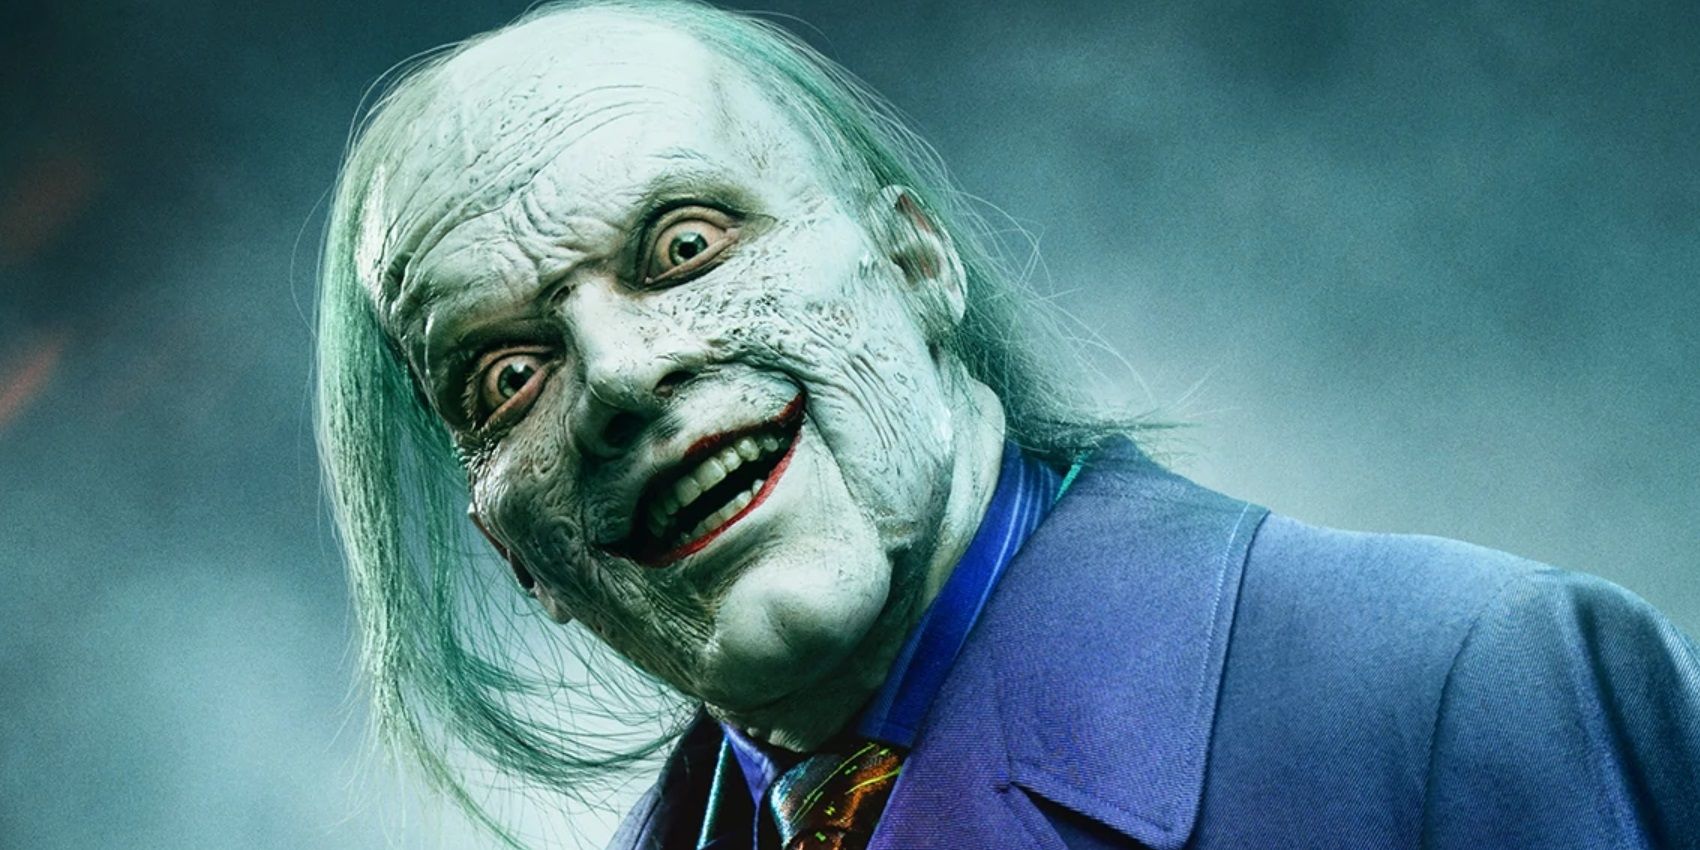 Cameron Monaghan's Jeremiah Valeska is Joker on Gotham